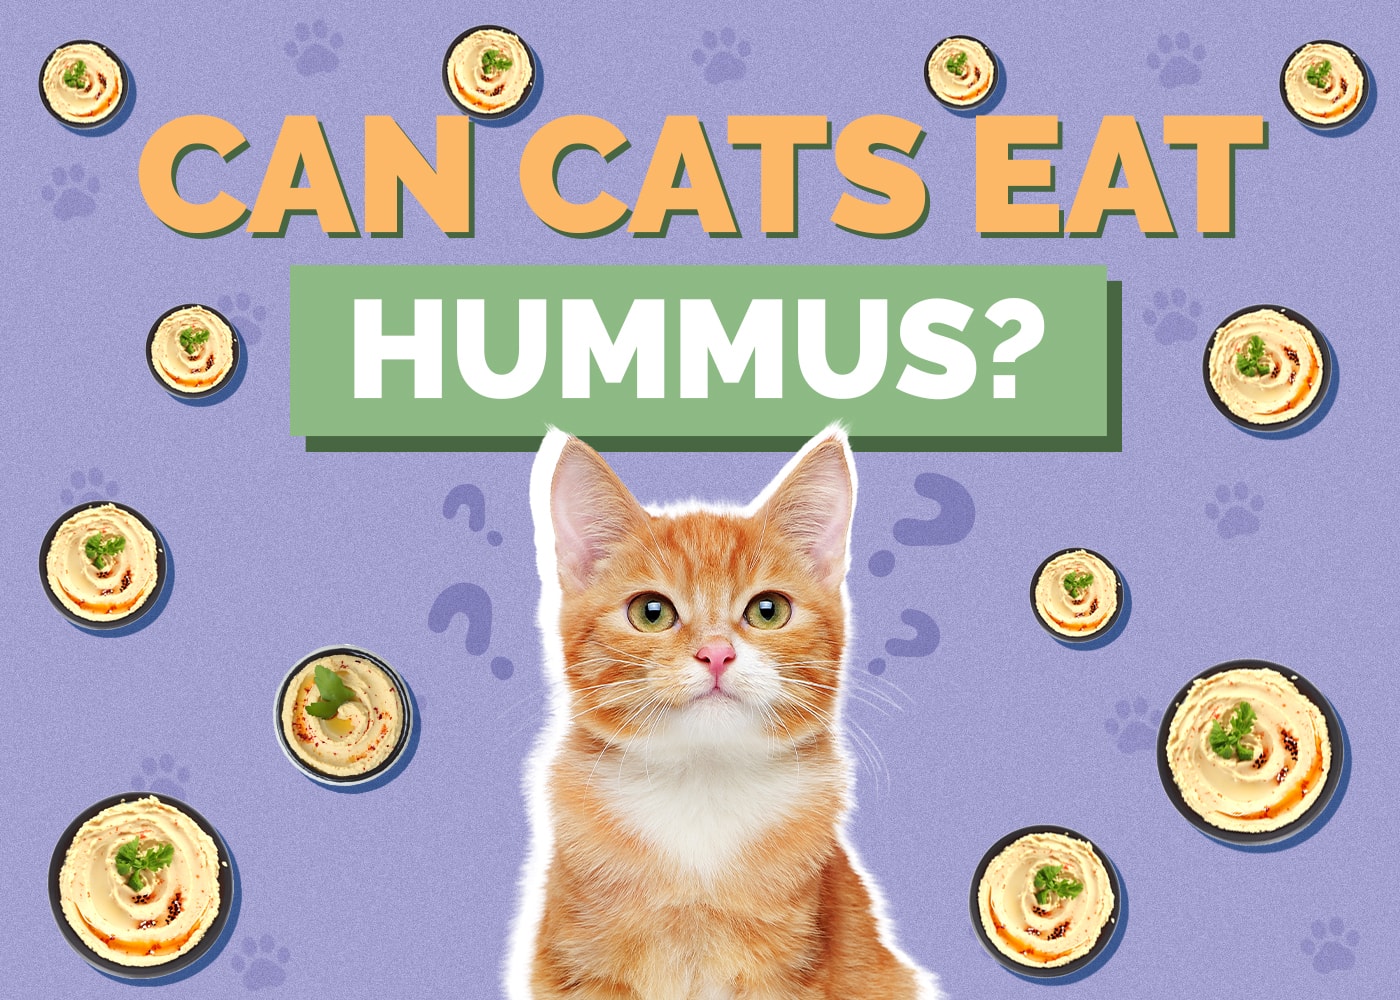 Can Cats Eat hummus